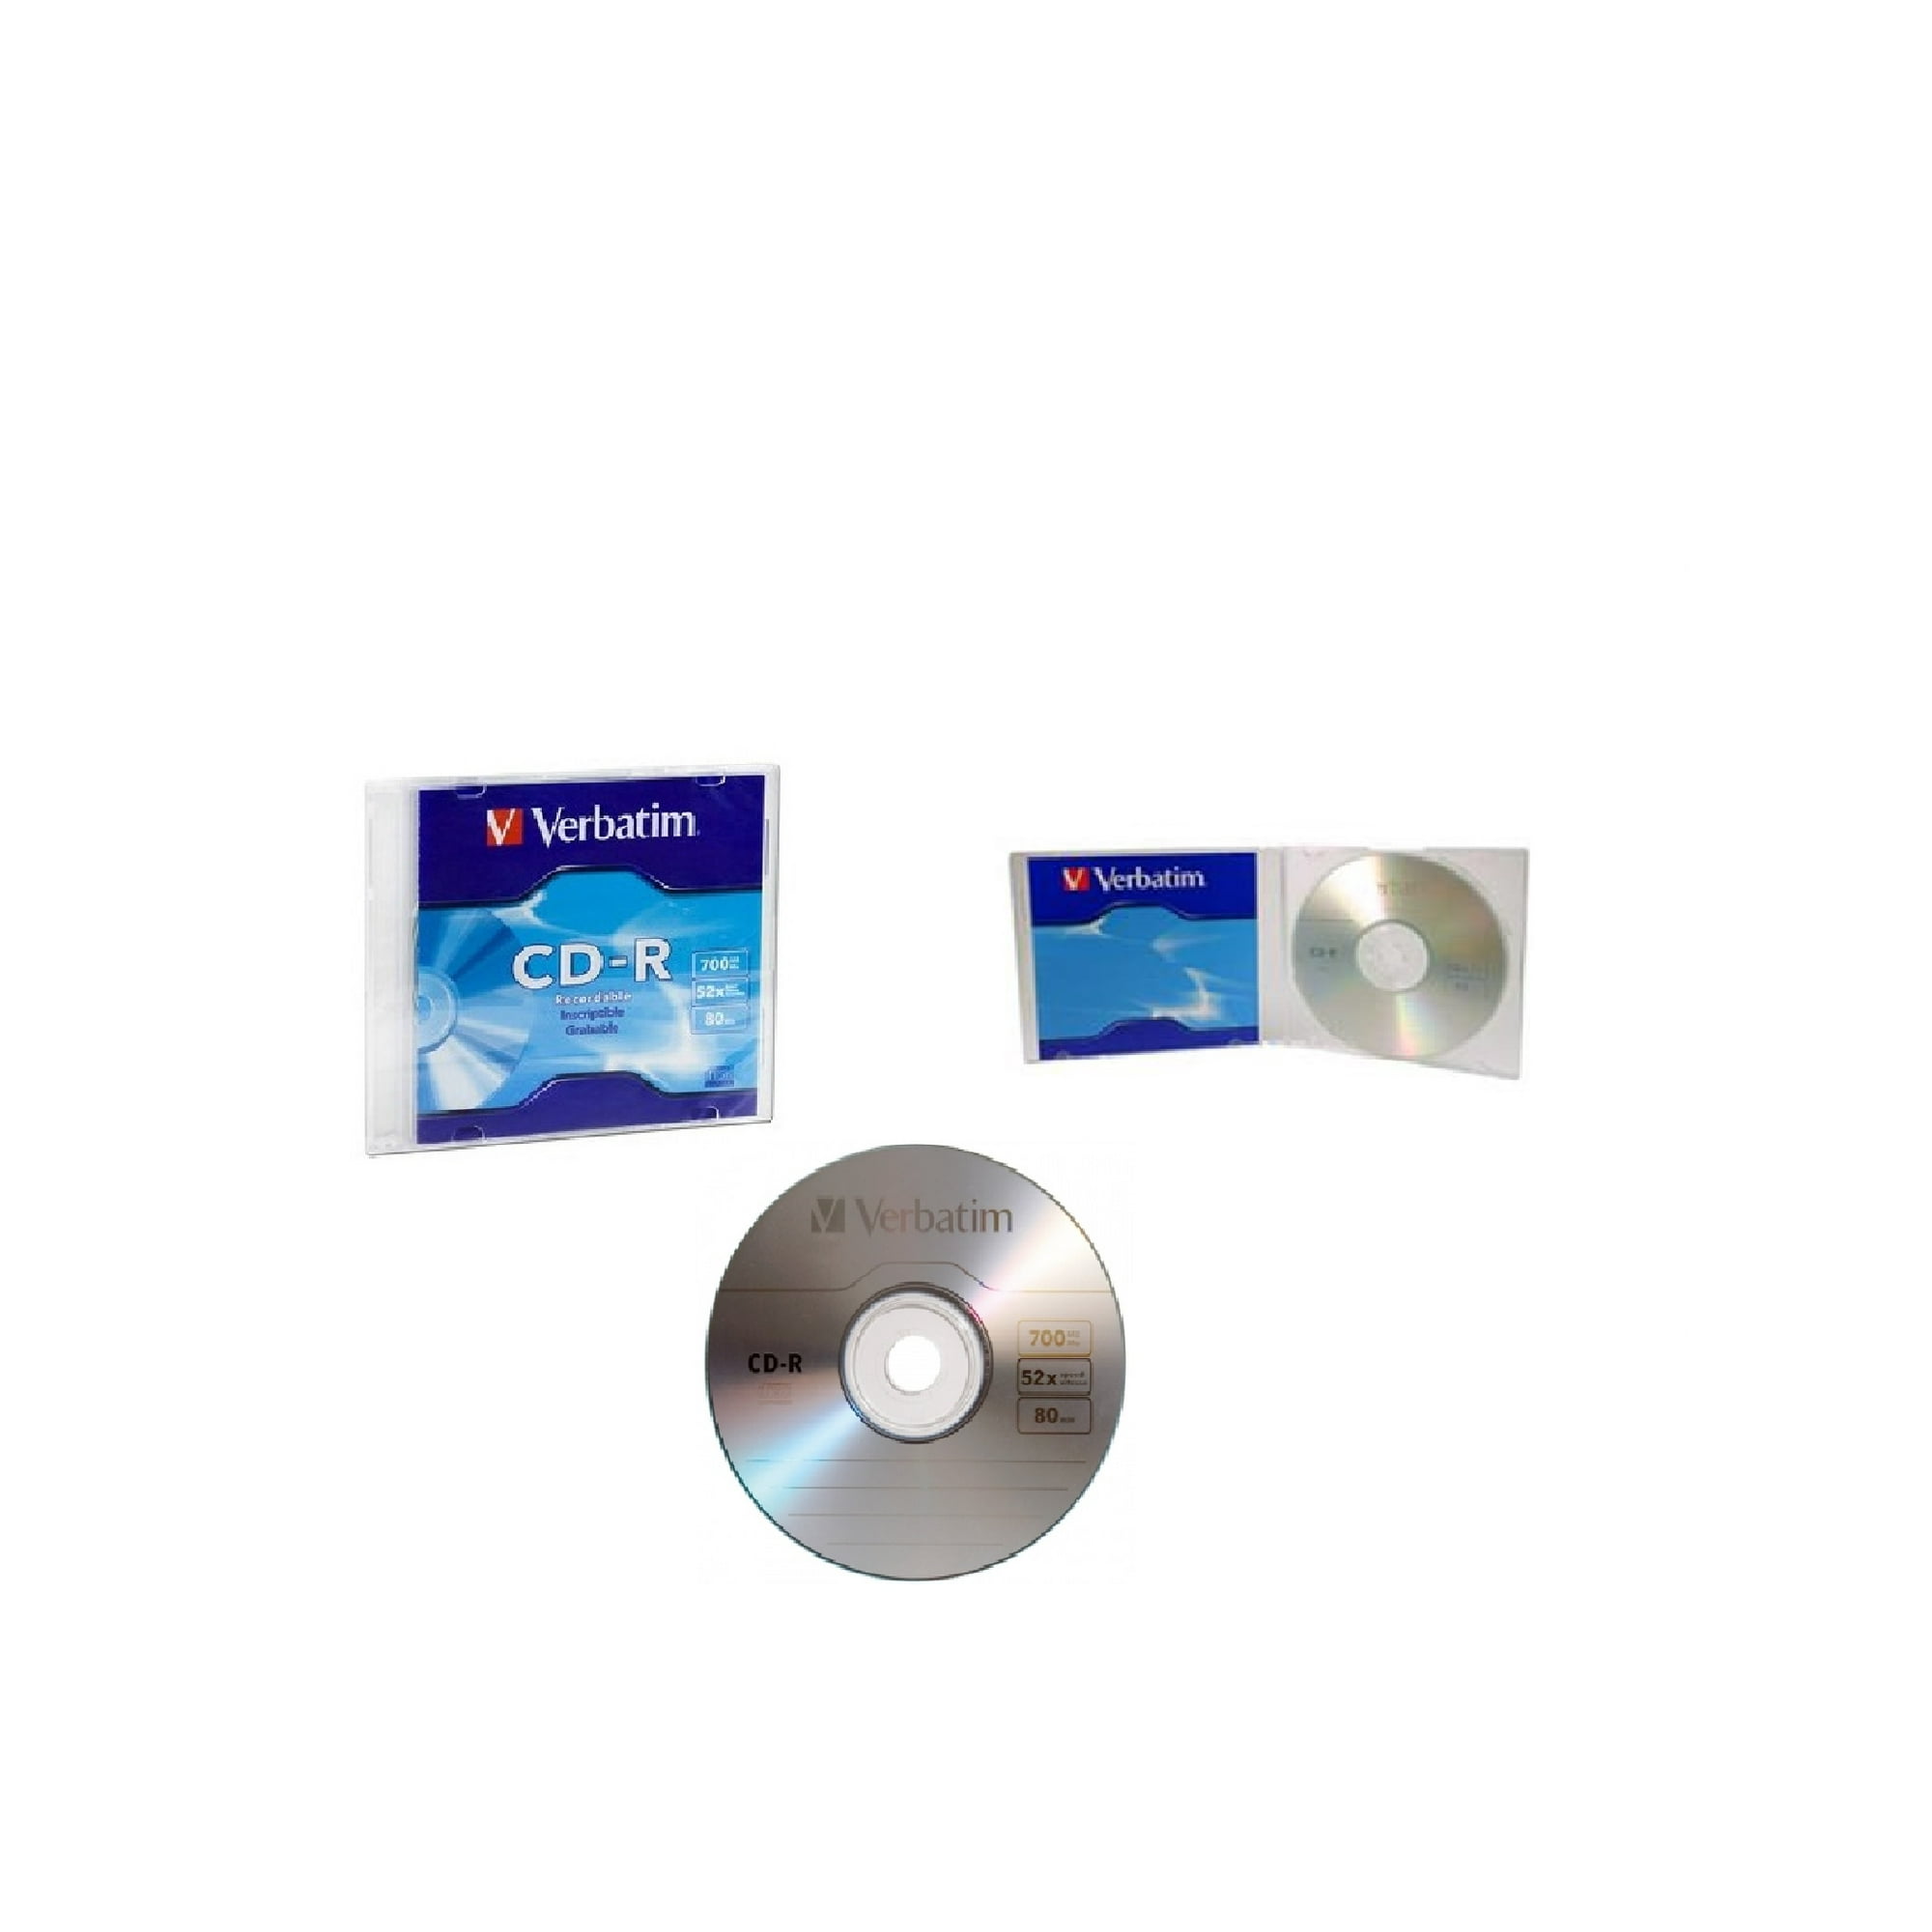 Reproductor de CD Irfora YR-90 Reproductor de CD portátil con auriculares  con cable de 3,5 mm Reproductor de música pequeño Compatible con tarjeta TF  Pantalla digital Botón táctil Irfora Reproductor de CD